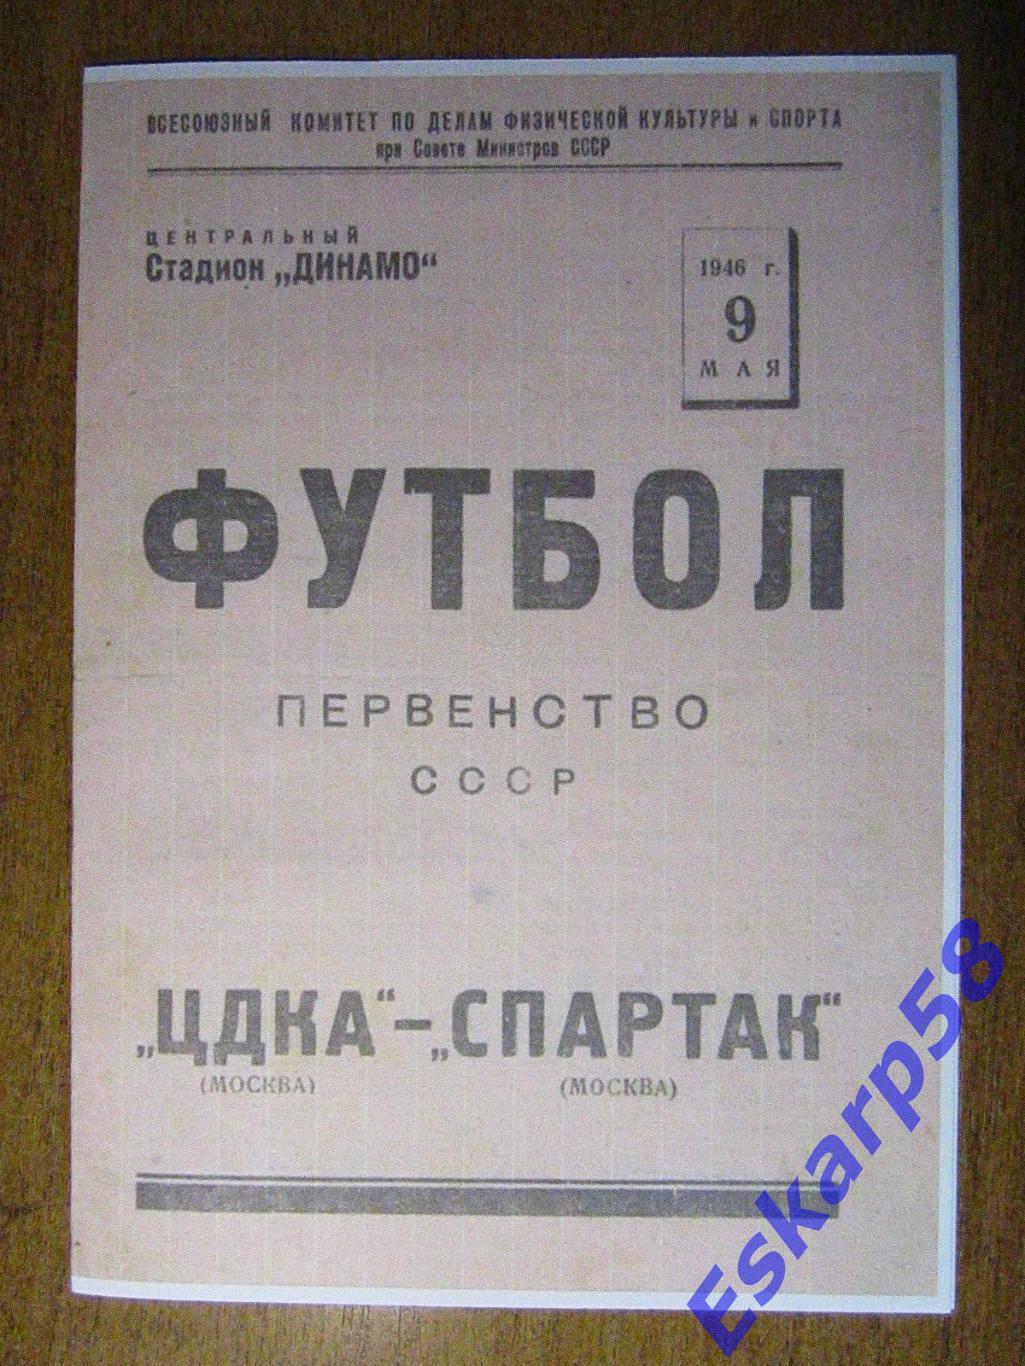 1946.ЦДКА-Спартак Москва.9.05